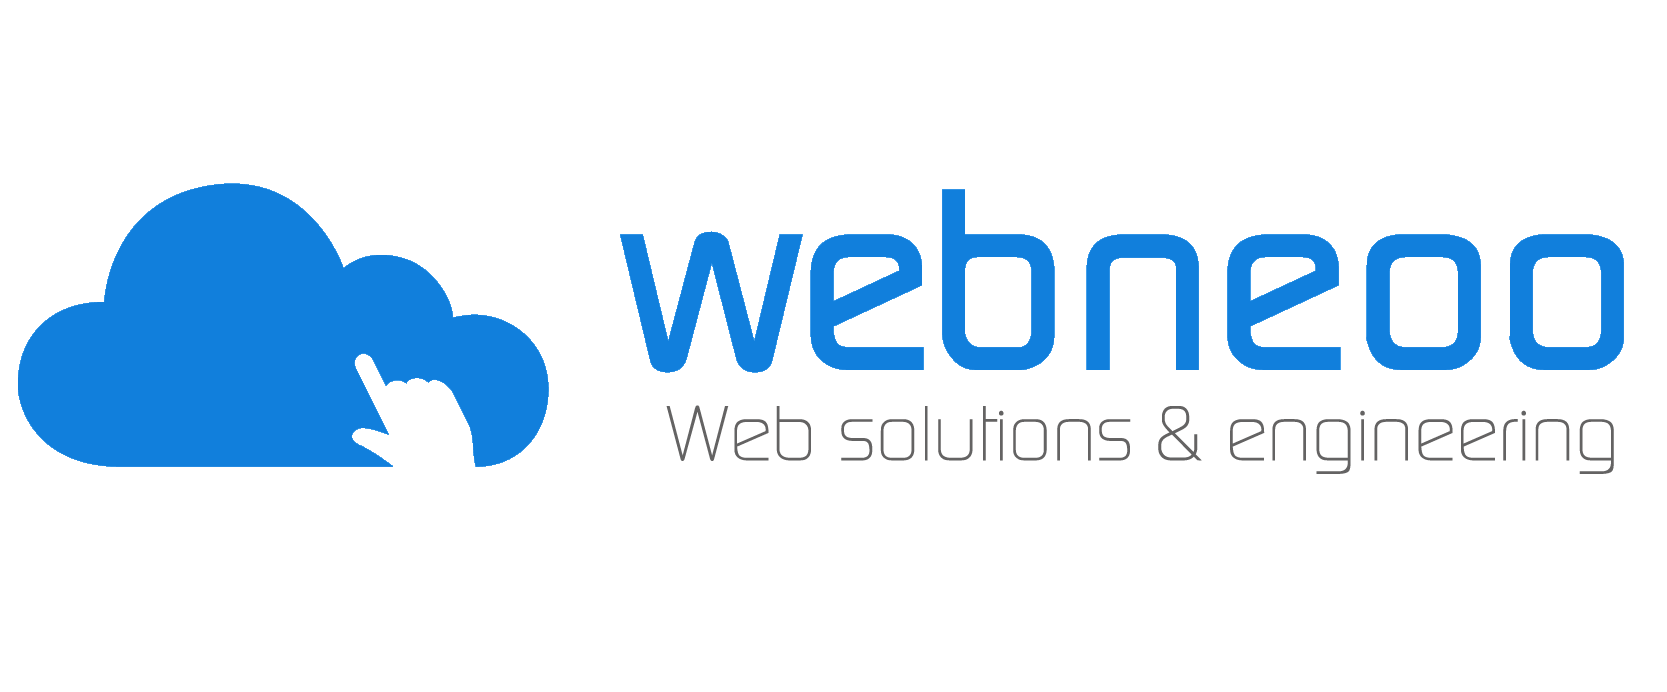 Webneoo, création site Internet